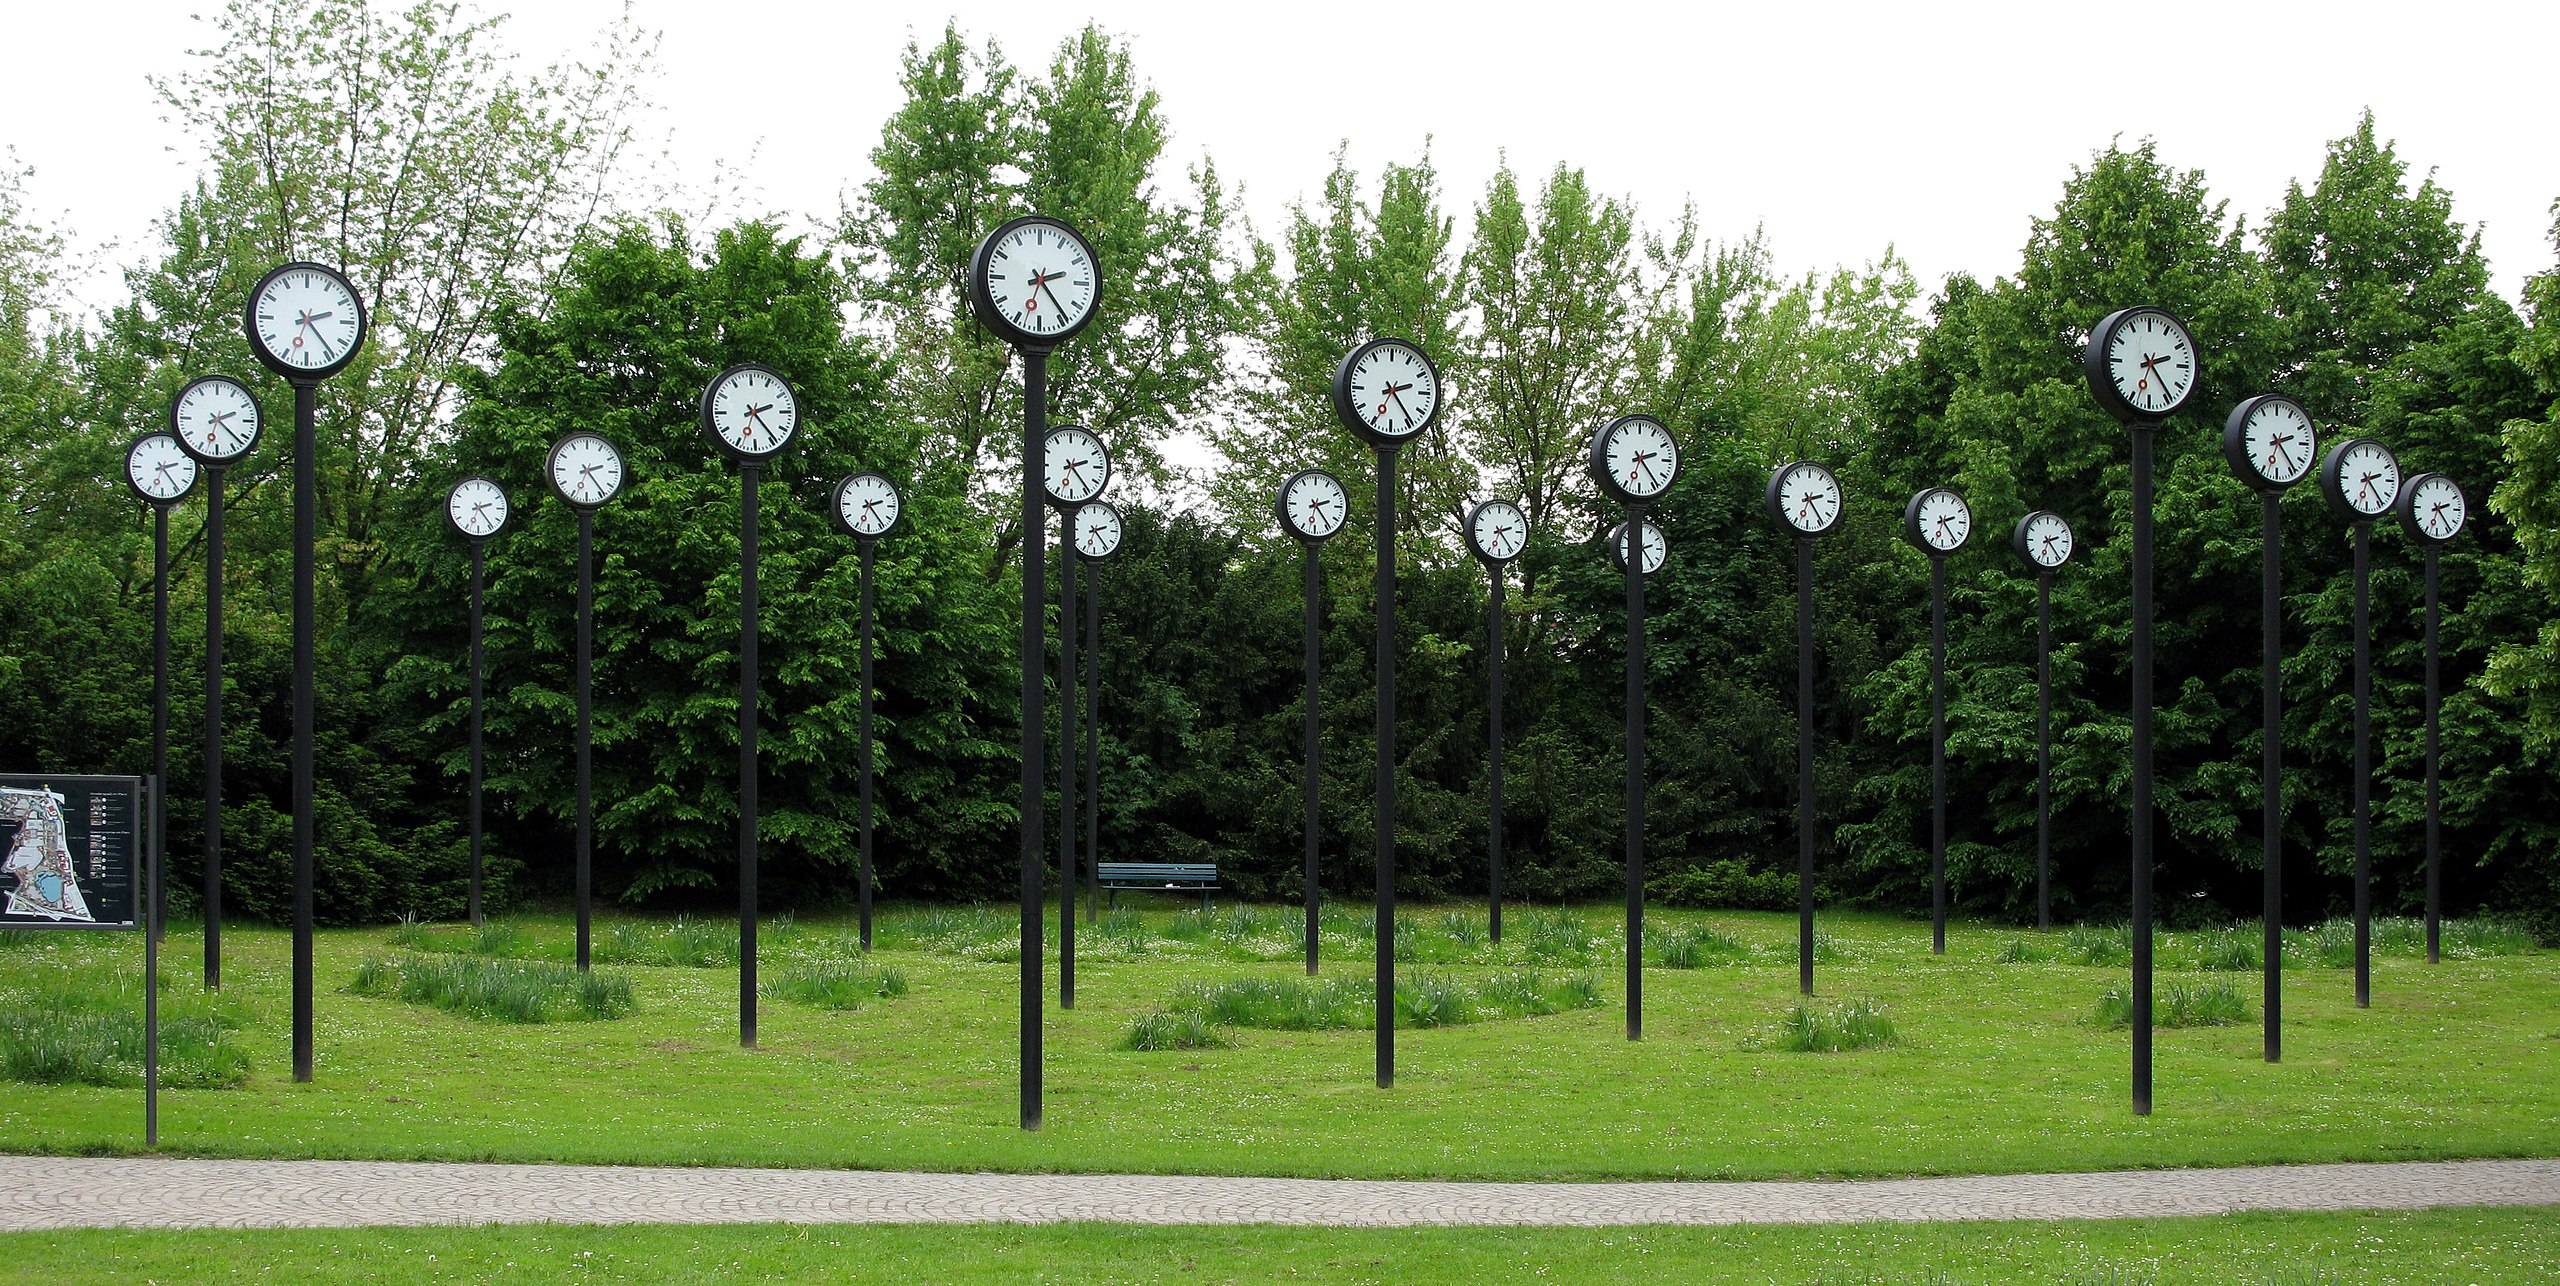 Klaus Rinke's art installation "Zeitfeld", consisting of 24 train station clocks